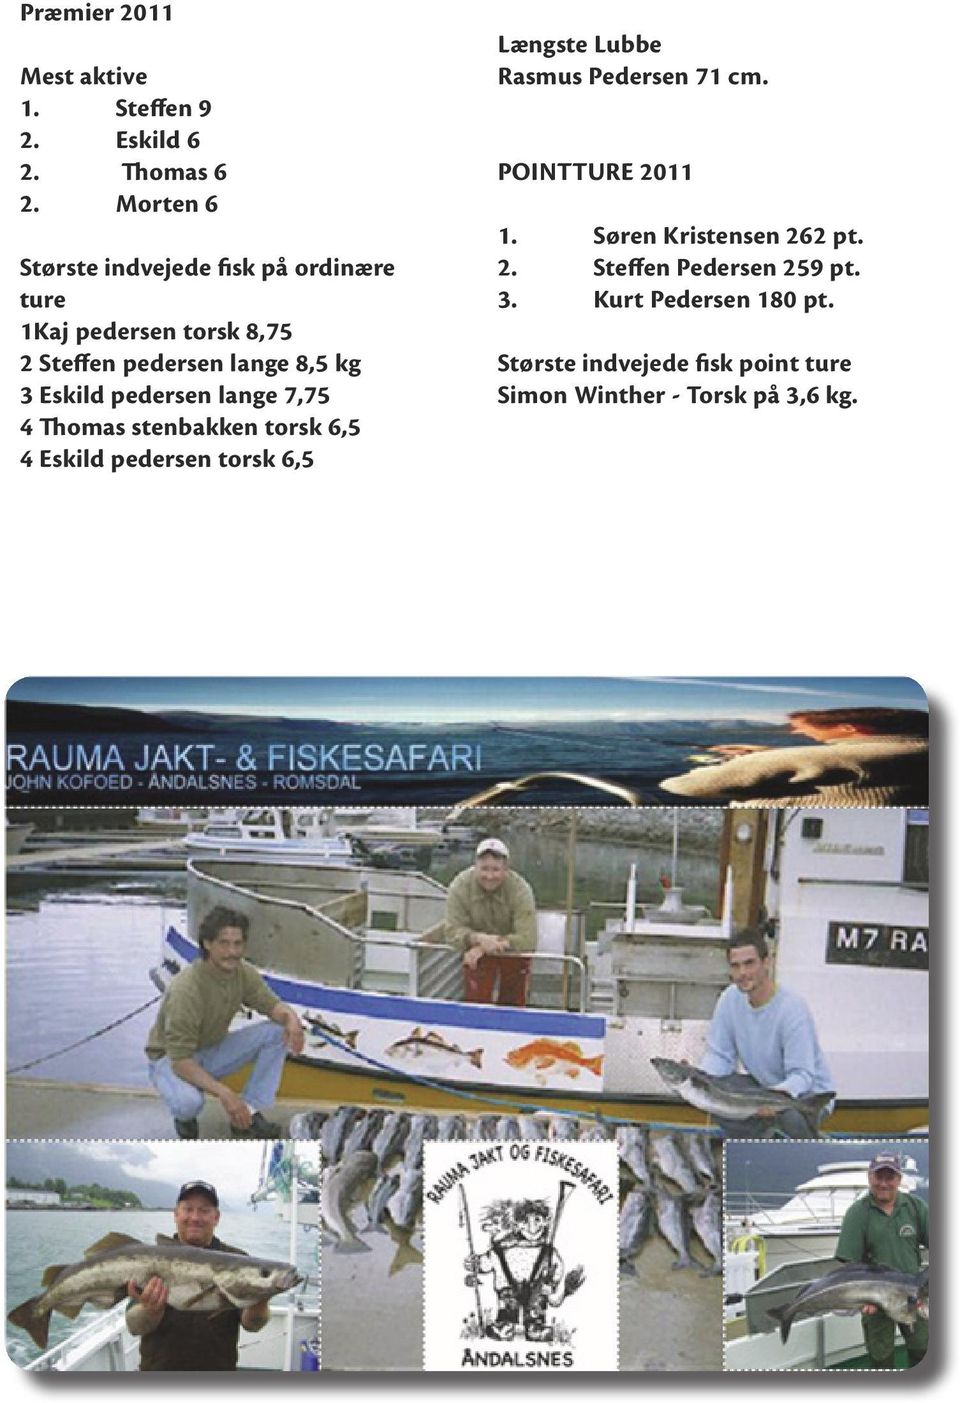 pedersen lange 7,75 4 Thomas stenbakken torsk 6,5 4 Eskild pedersen torsk 6,5 Længste Lubbe Rasmus Pedersen 71 cm.